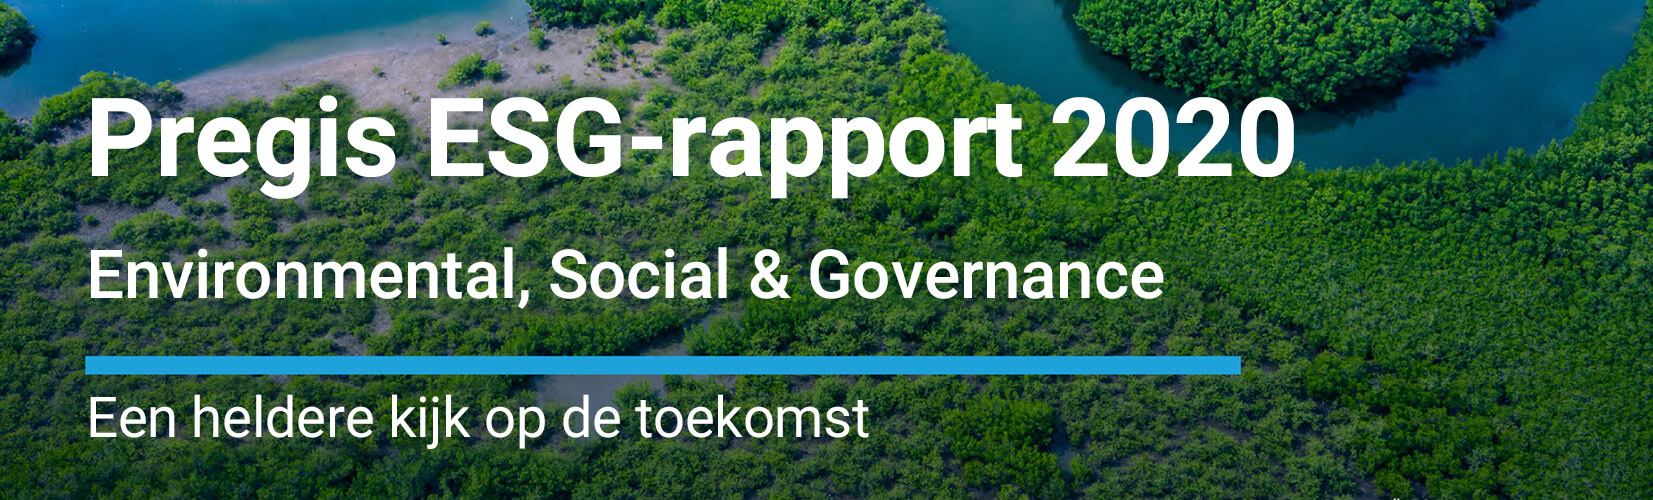 Pregis ESG-rapport 2020